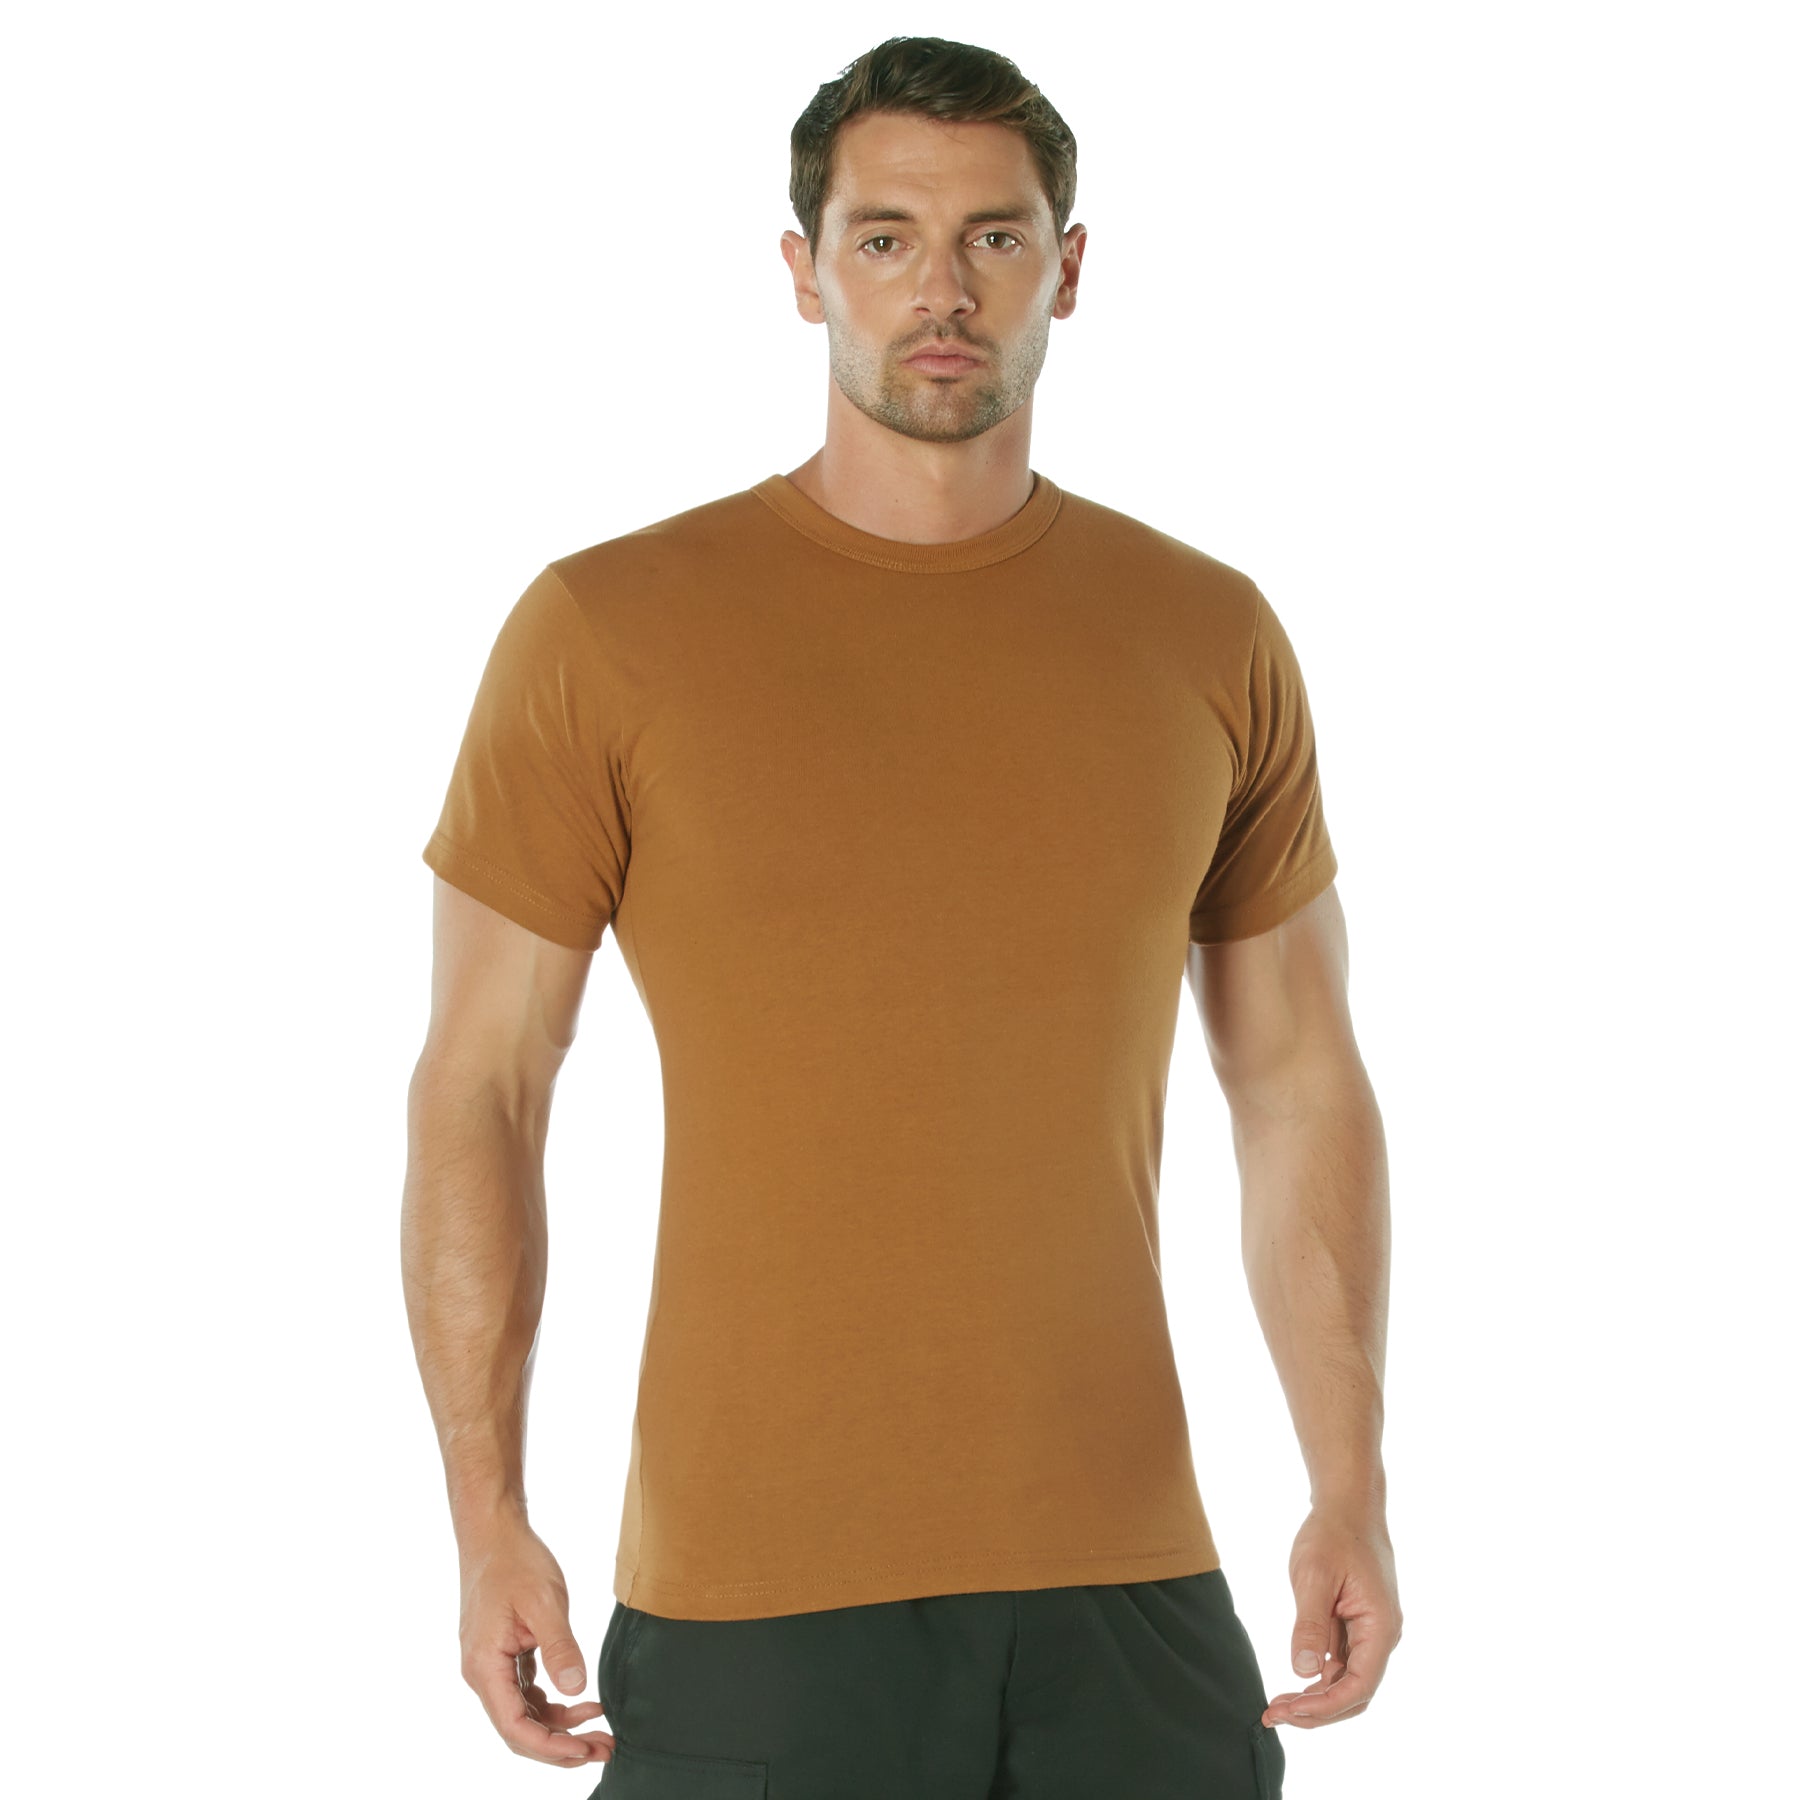 [AR 670-1] Poly/Cotton Heavyweight T-Shirts